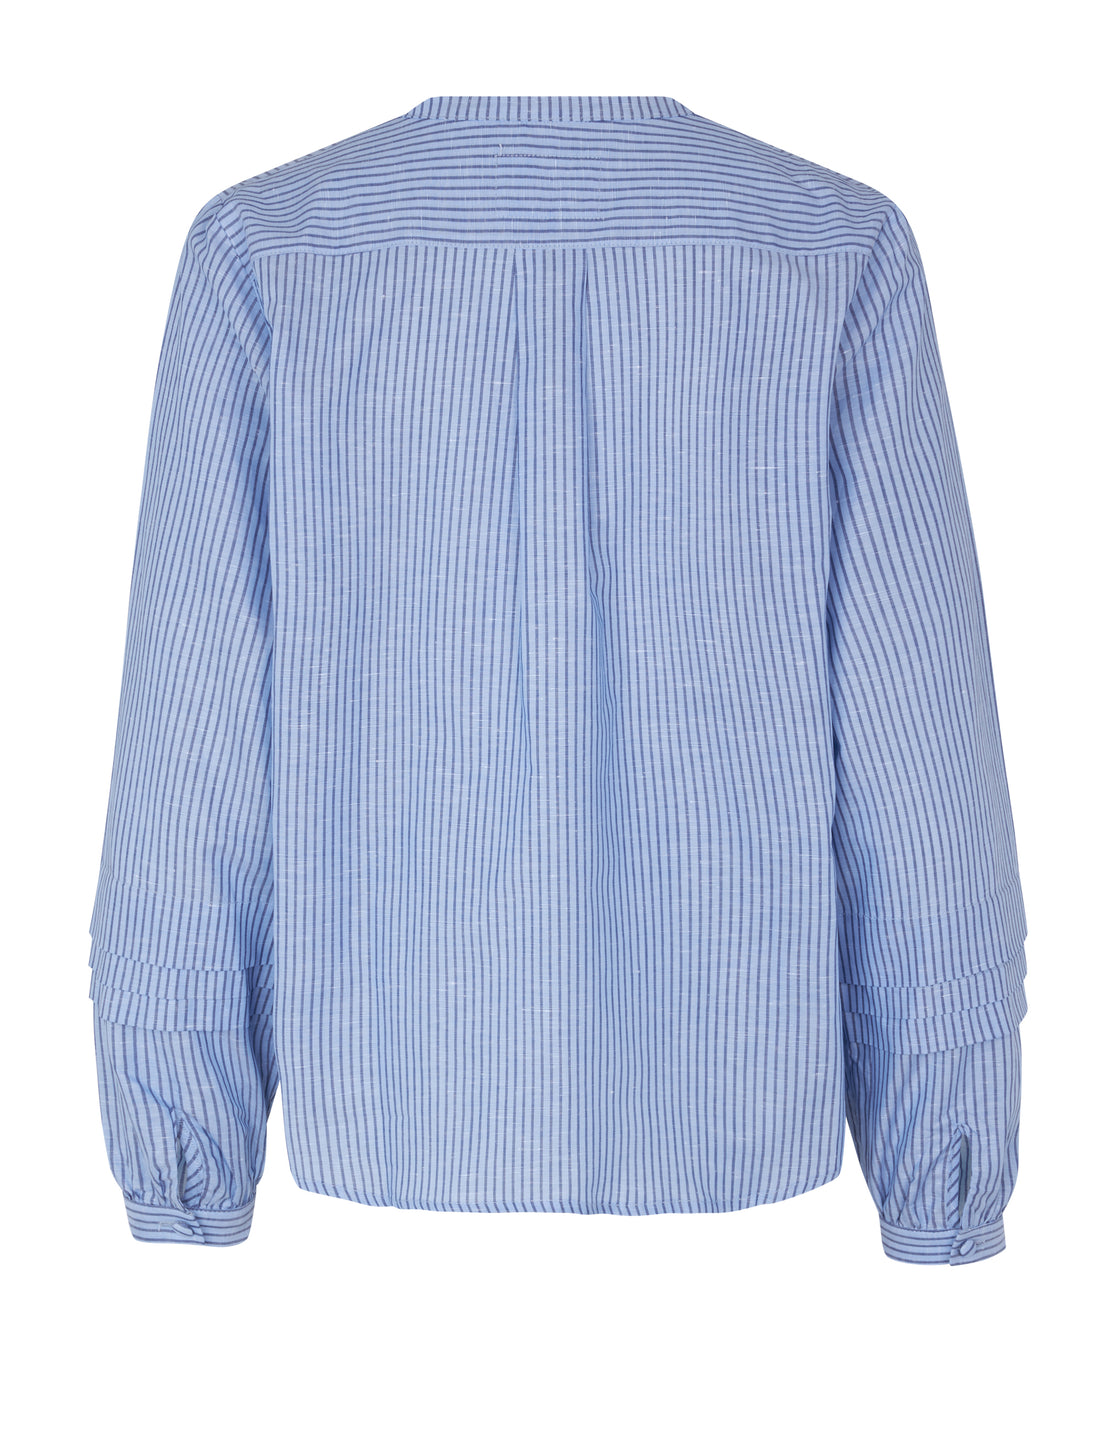 Michela shirt blue stripe